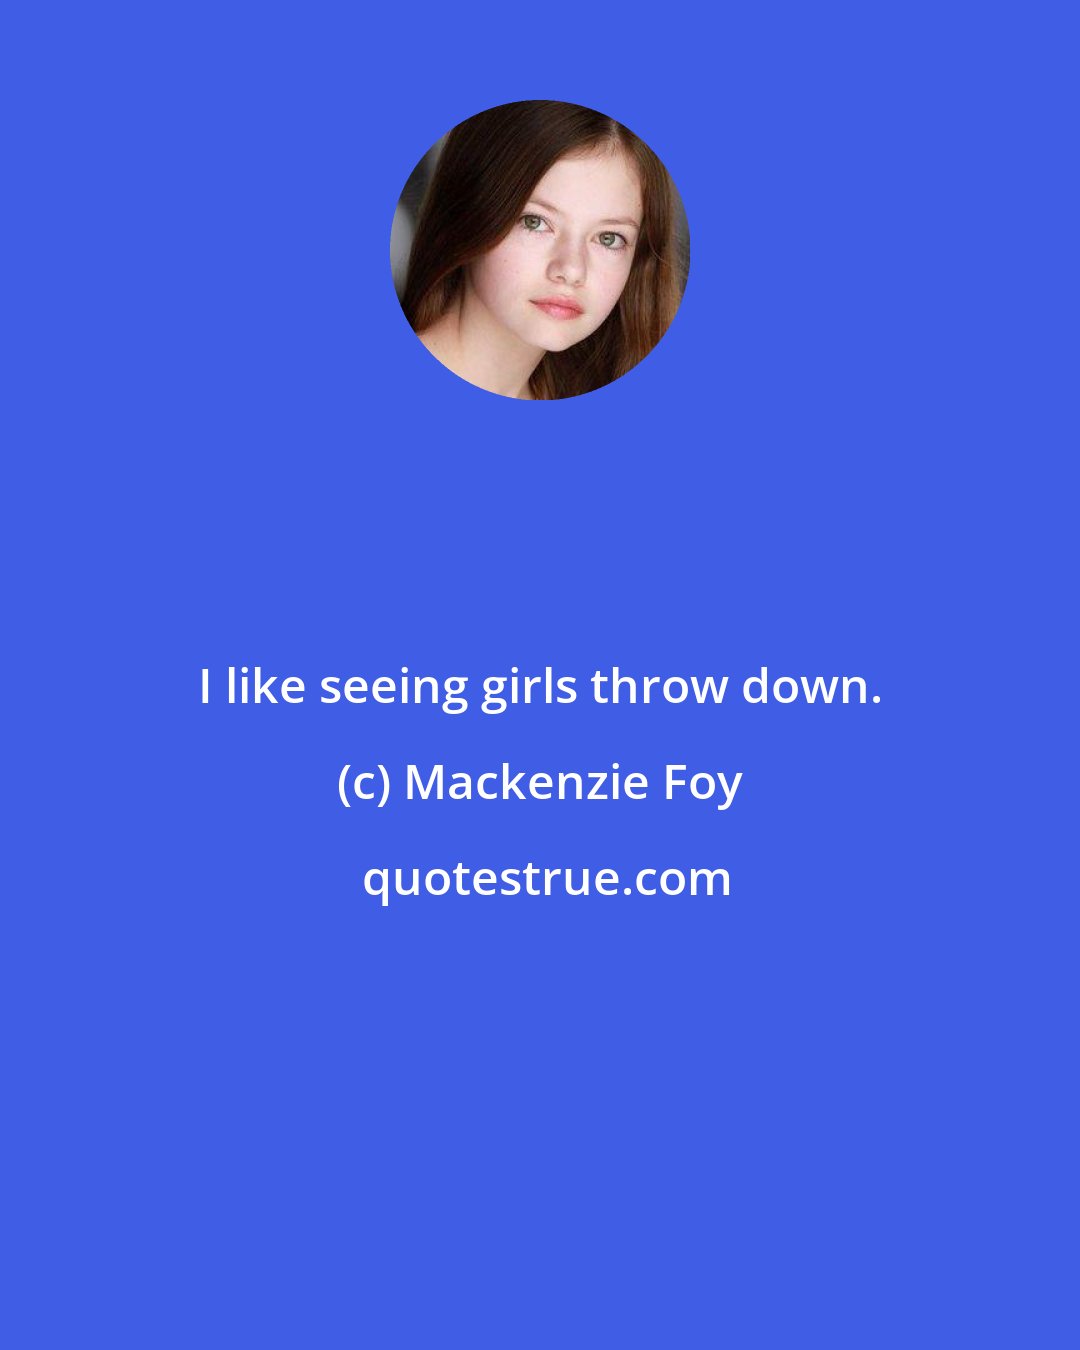 Mackenzie Foy: I like seeing girls throw down.